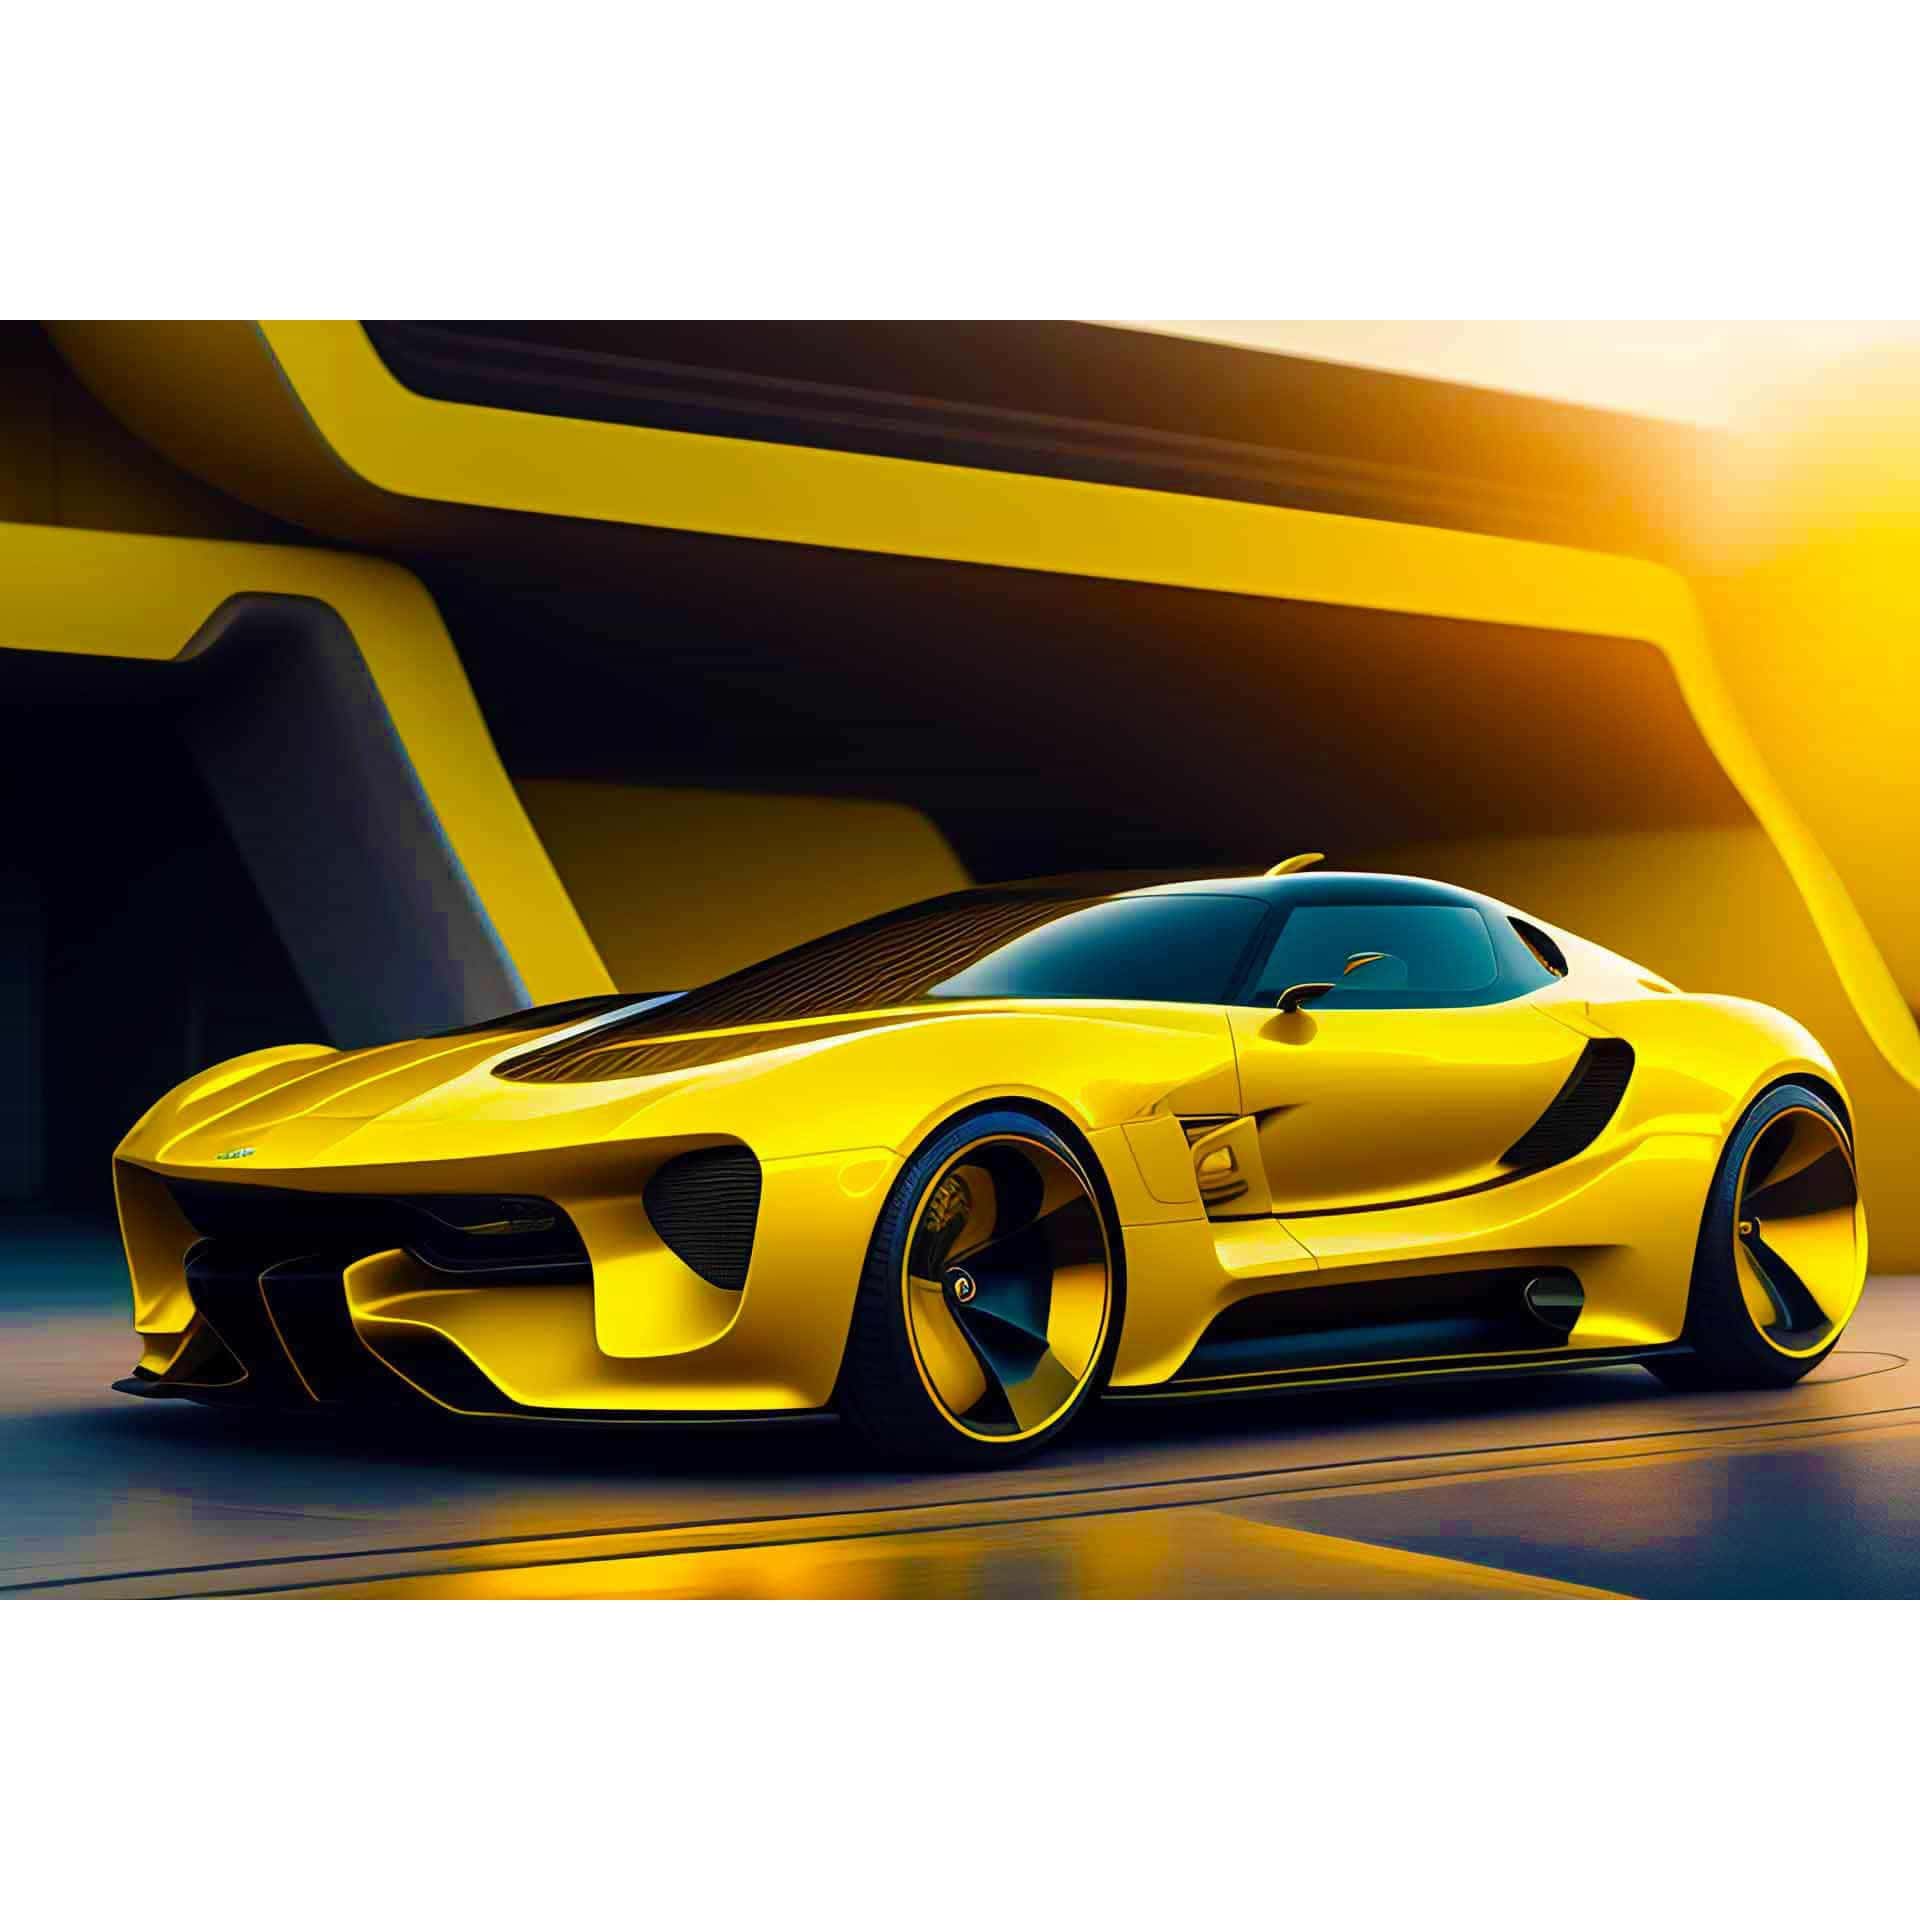 Diamond Painting - Gelber Sportwagen - gedruckt in Ultra-HD - Auto, Horizontal